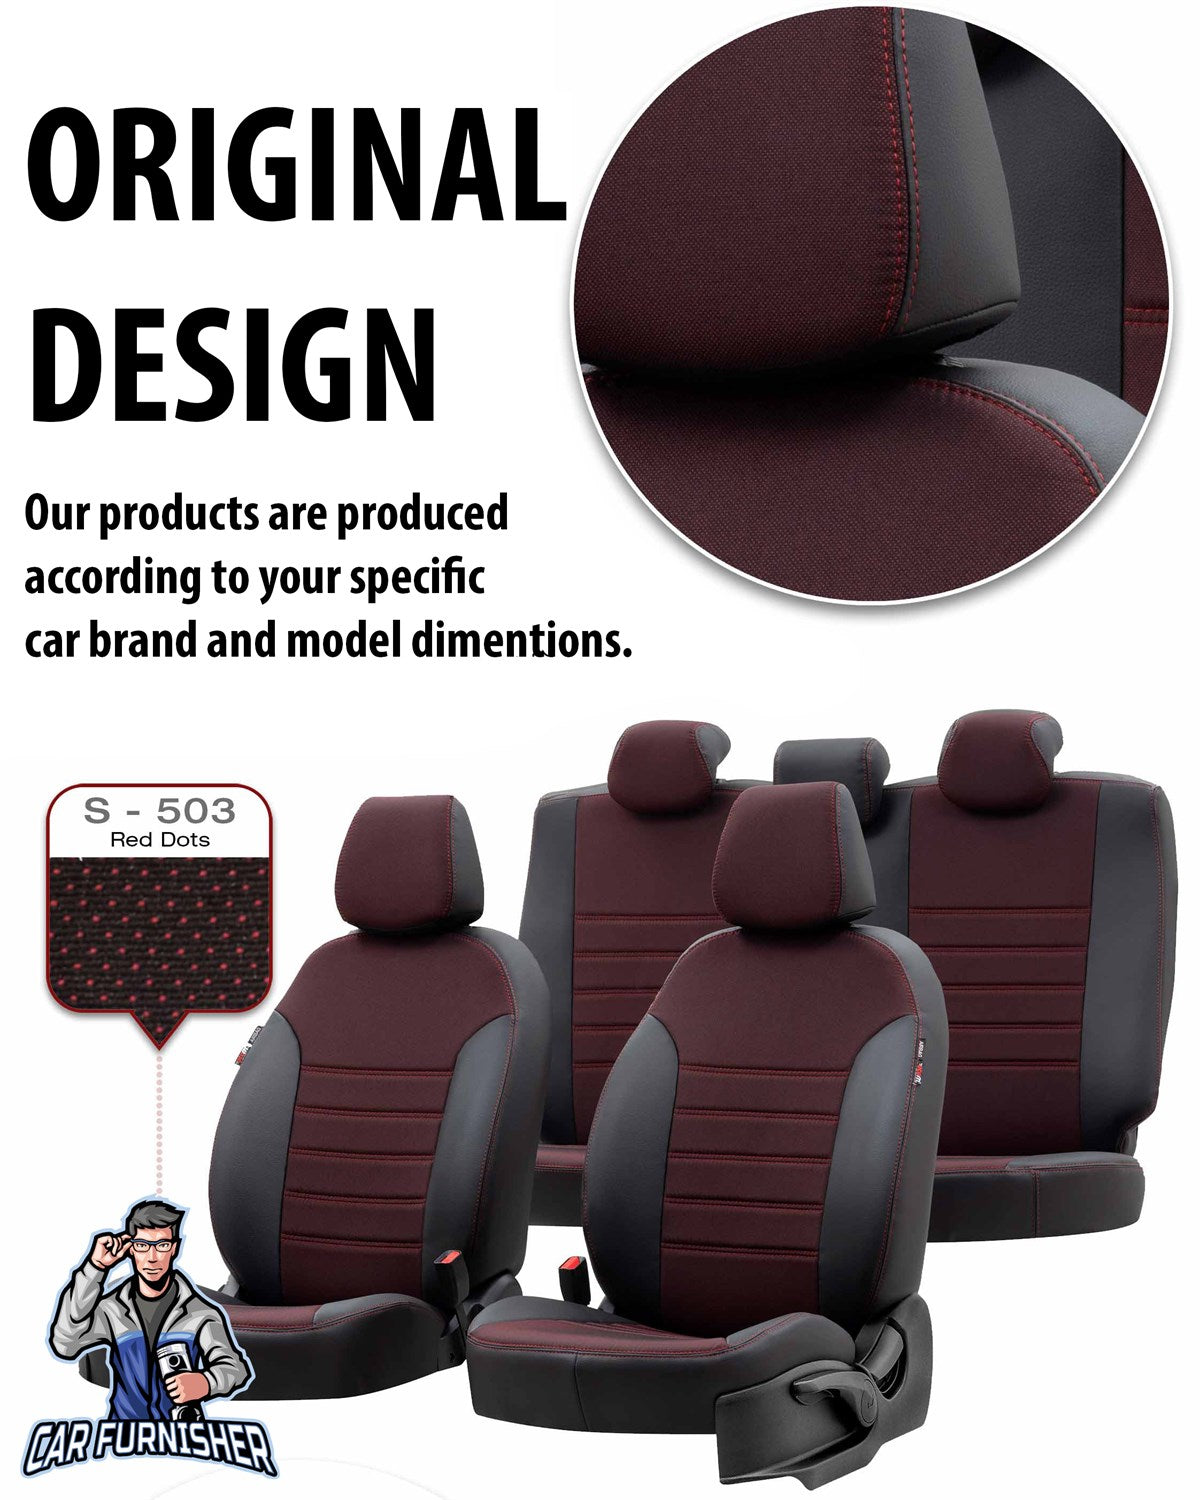 Isuzu Nkr Seat Covers Paris Leather & Jacquard Design Gray Leather & Jacquard Fabric